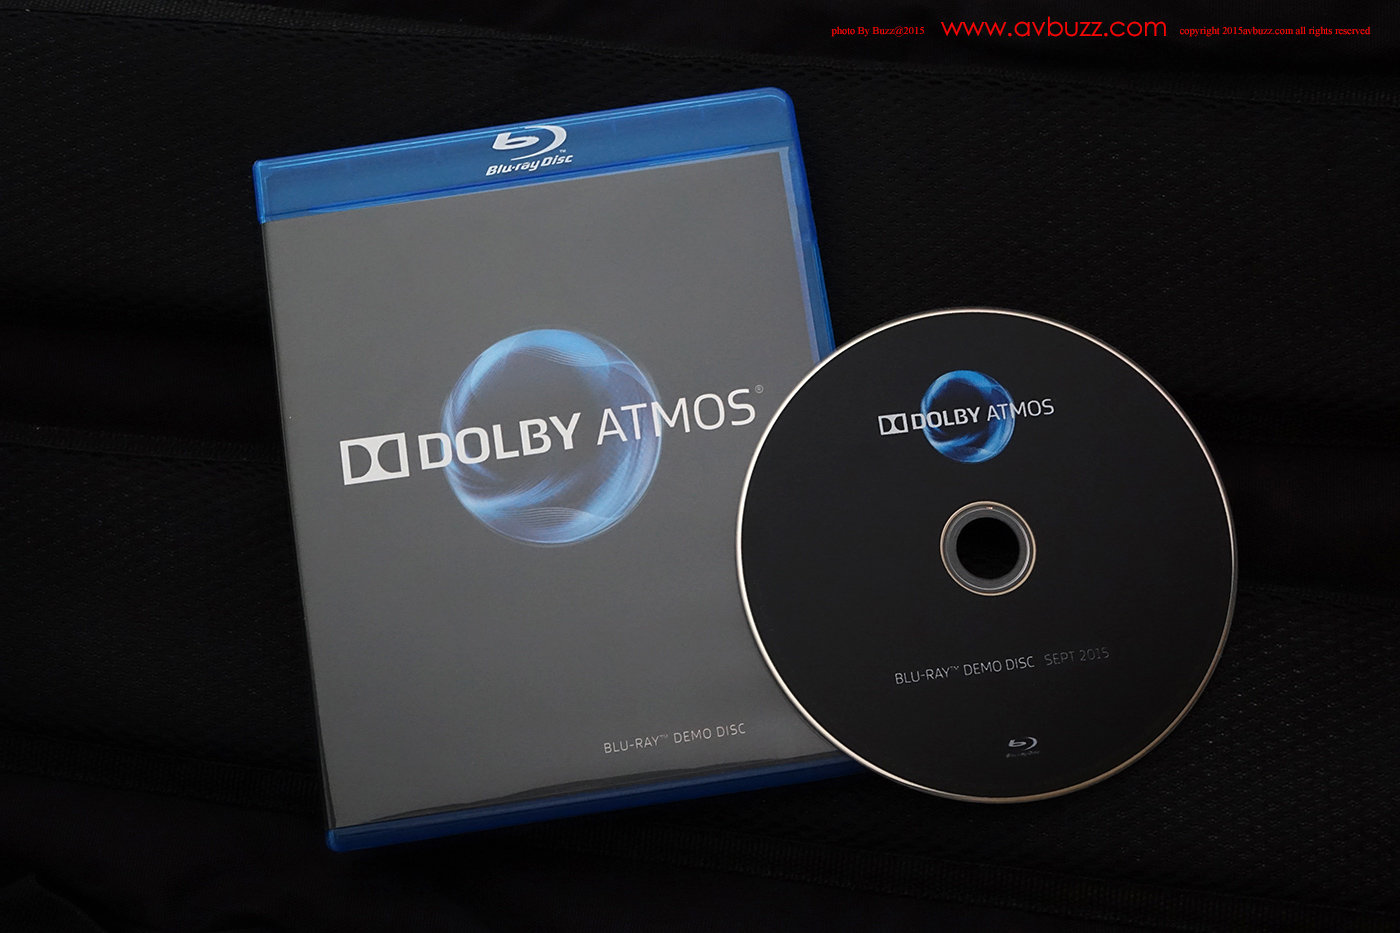 dolby atmos video demo